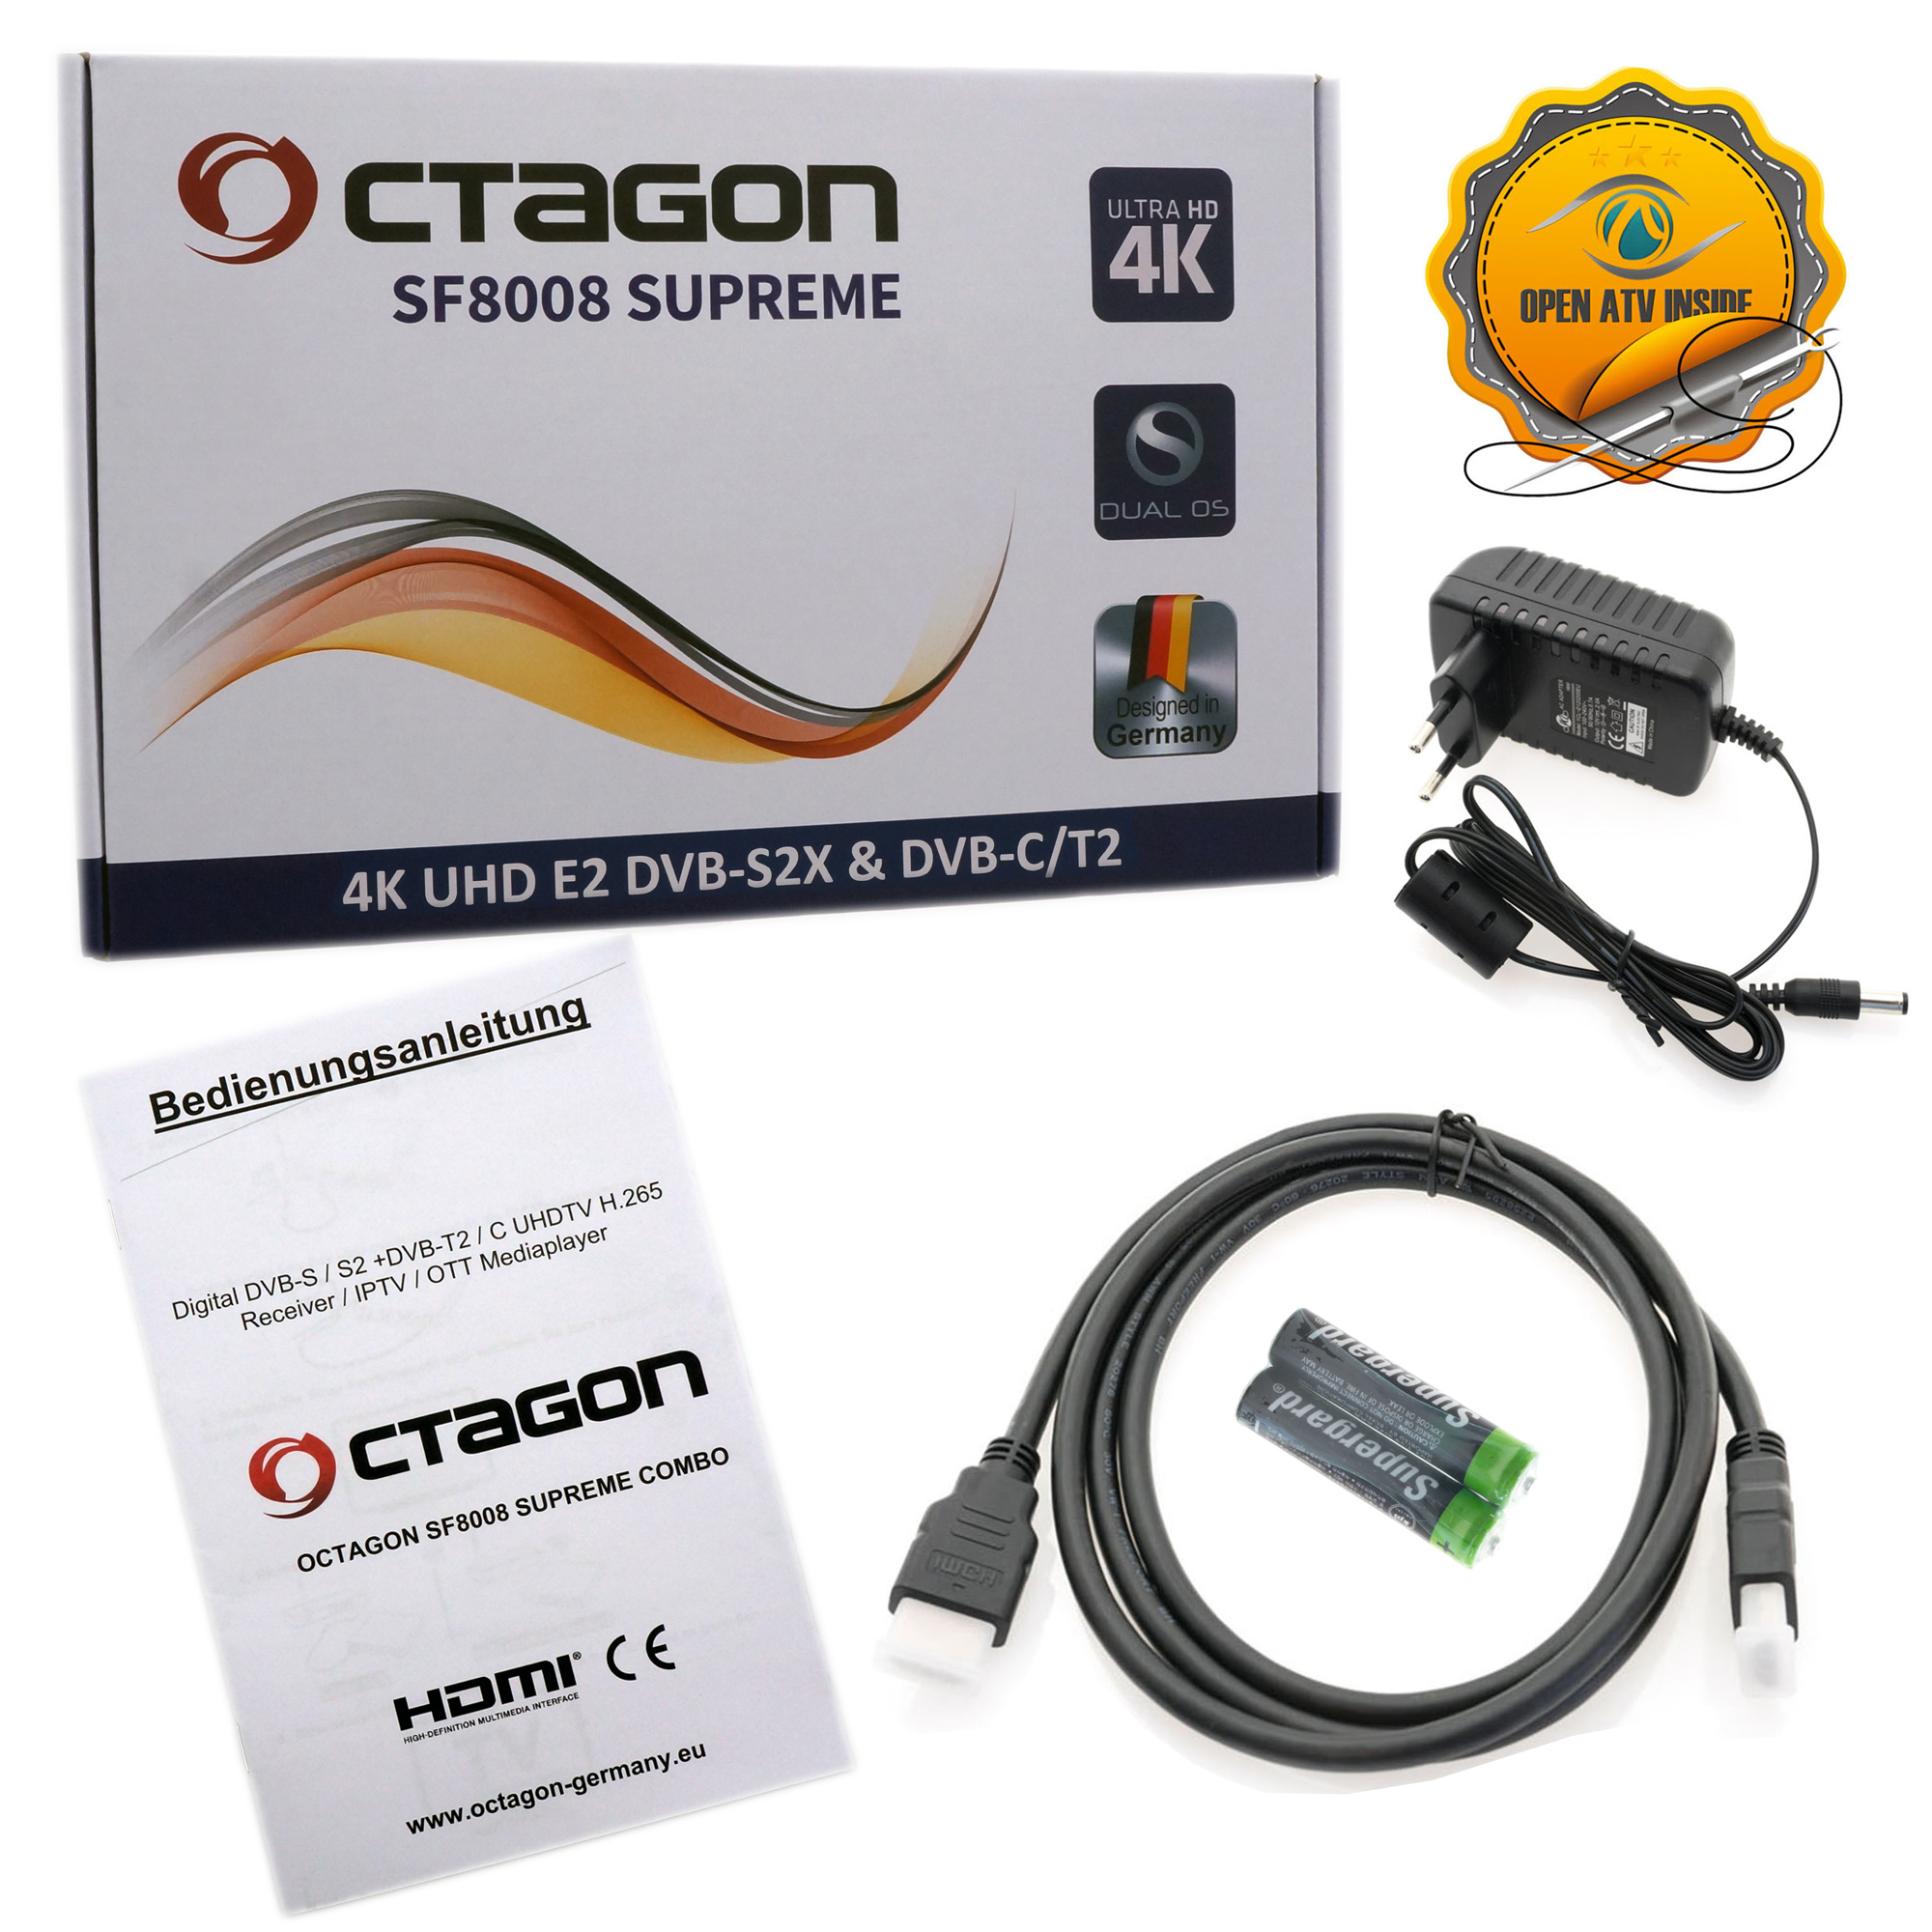 OCTAGON SF8008 SUPREME 4K UHD E2 DVB-S2X Combo DVB-C/T2 (Twin Tuner, M.2 Linux mit Schwarz) Sat 250GB & UHD Receiver SSD 4K Receiver